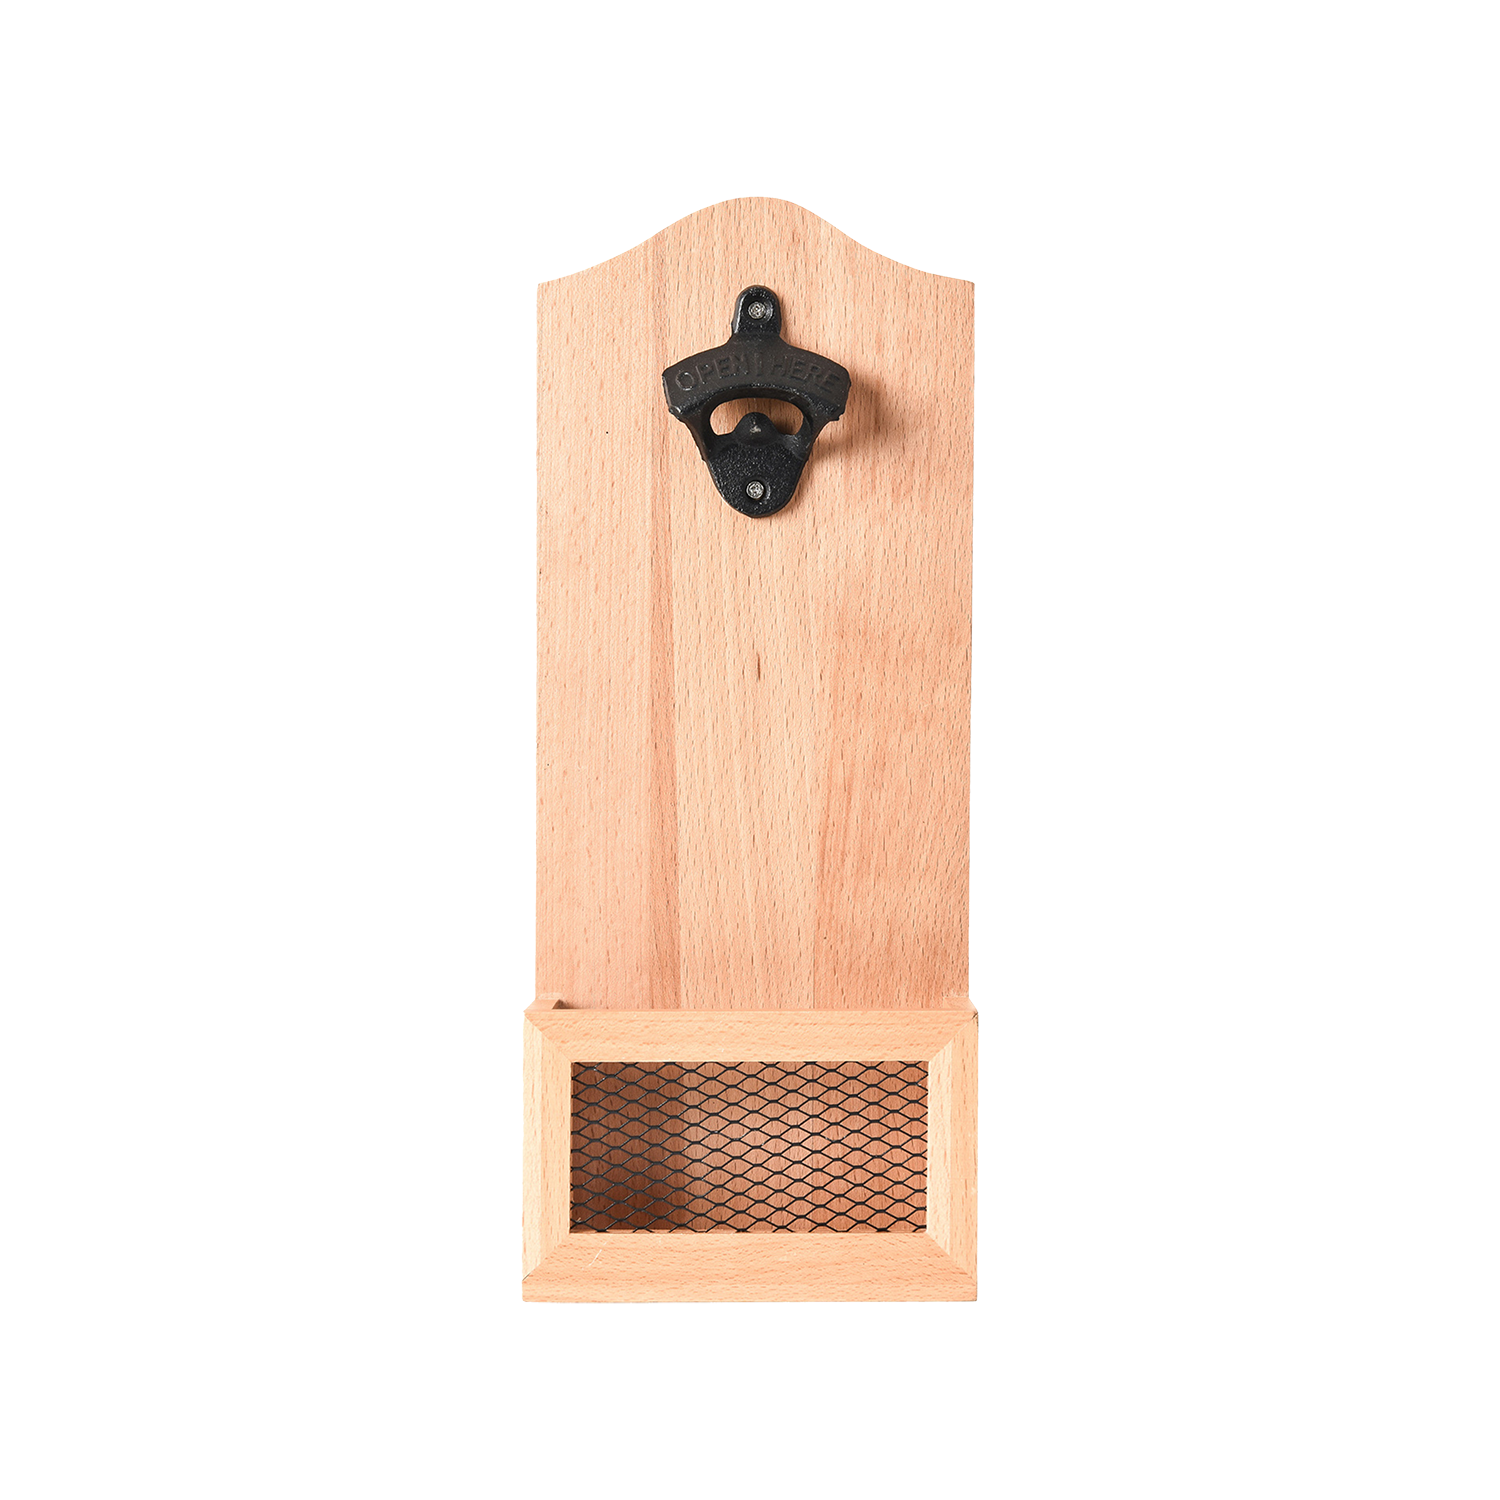 Personalised Wooden Wall Mounted Bottle Opener